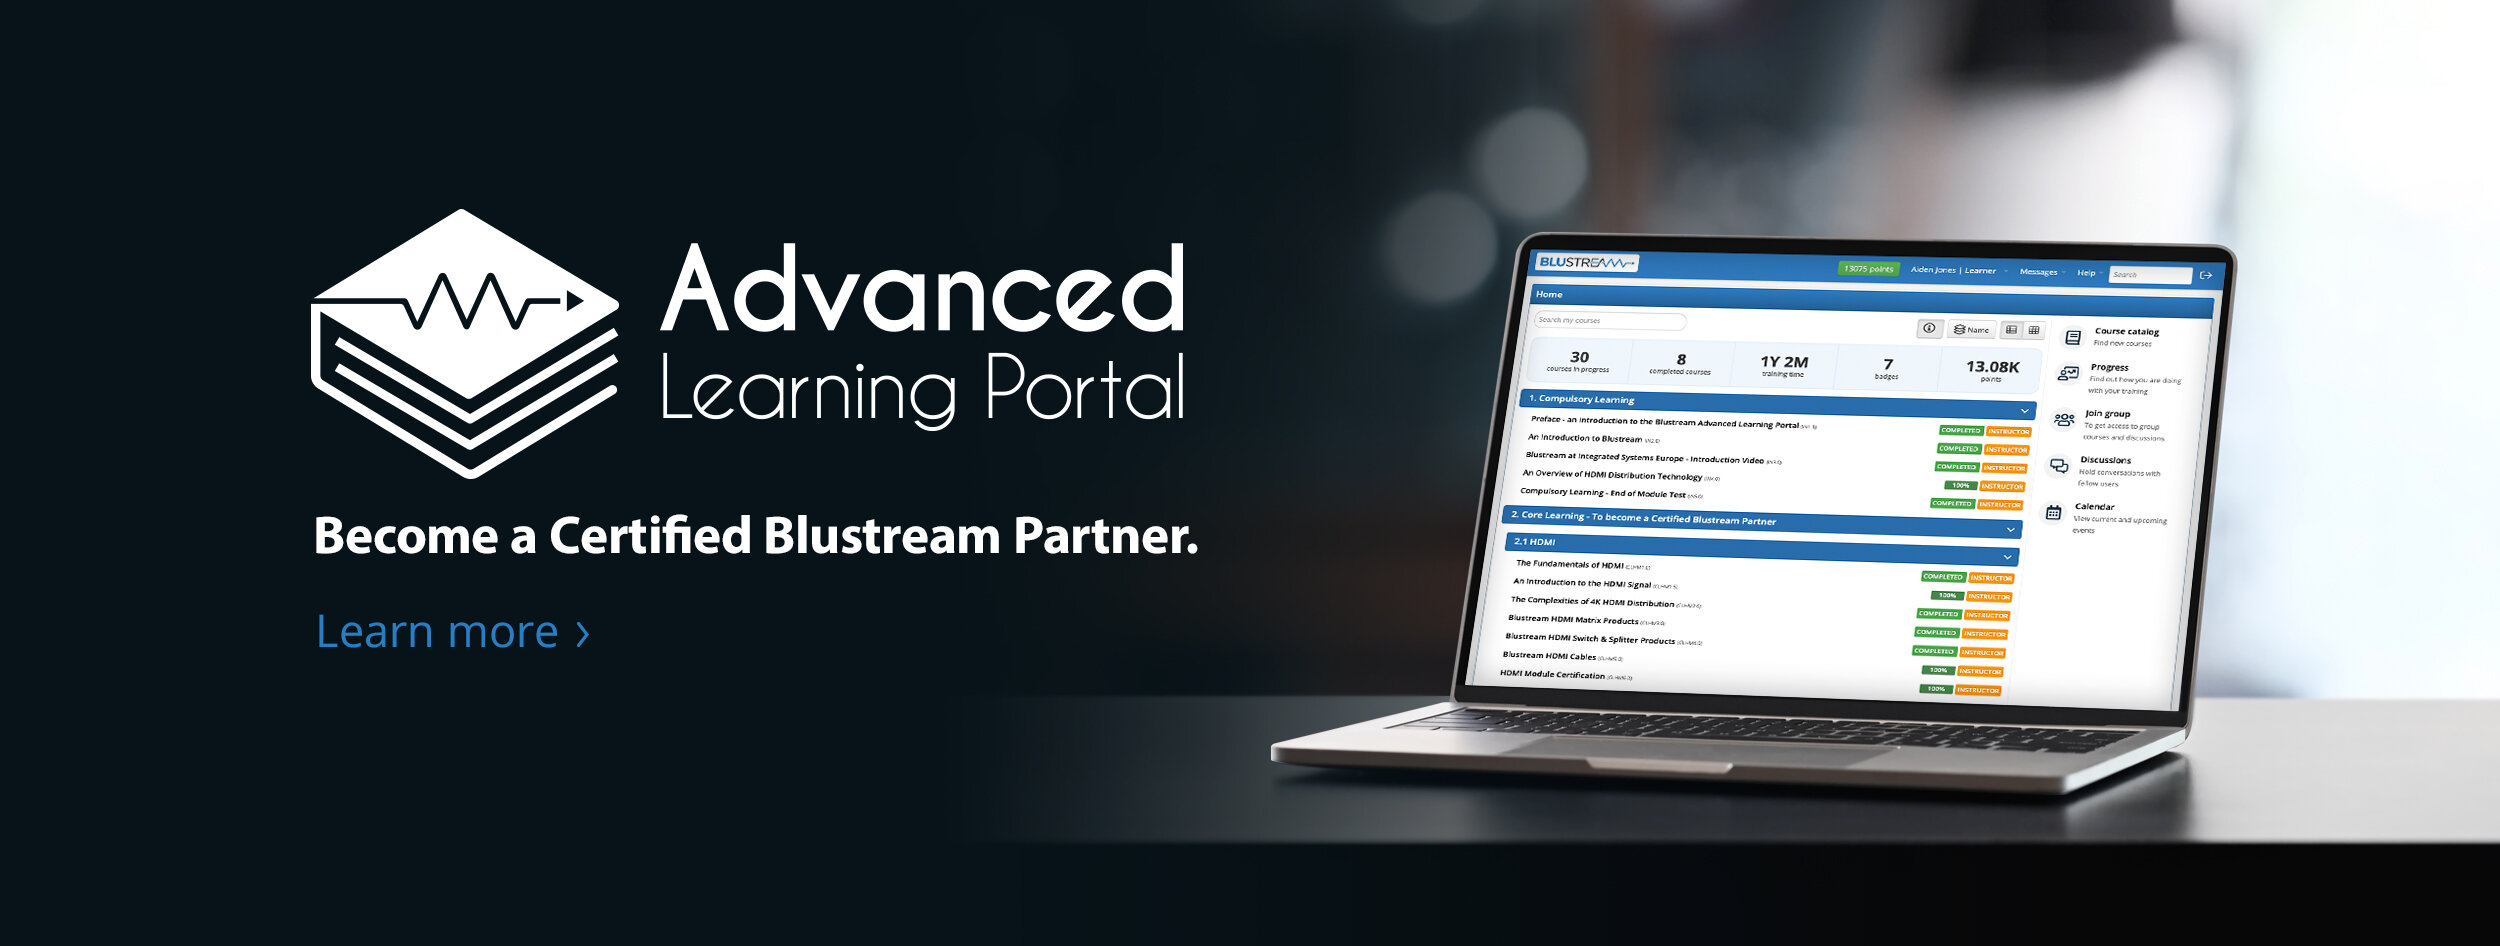 Advanced Learning Portal